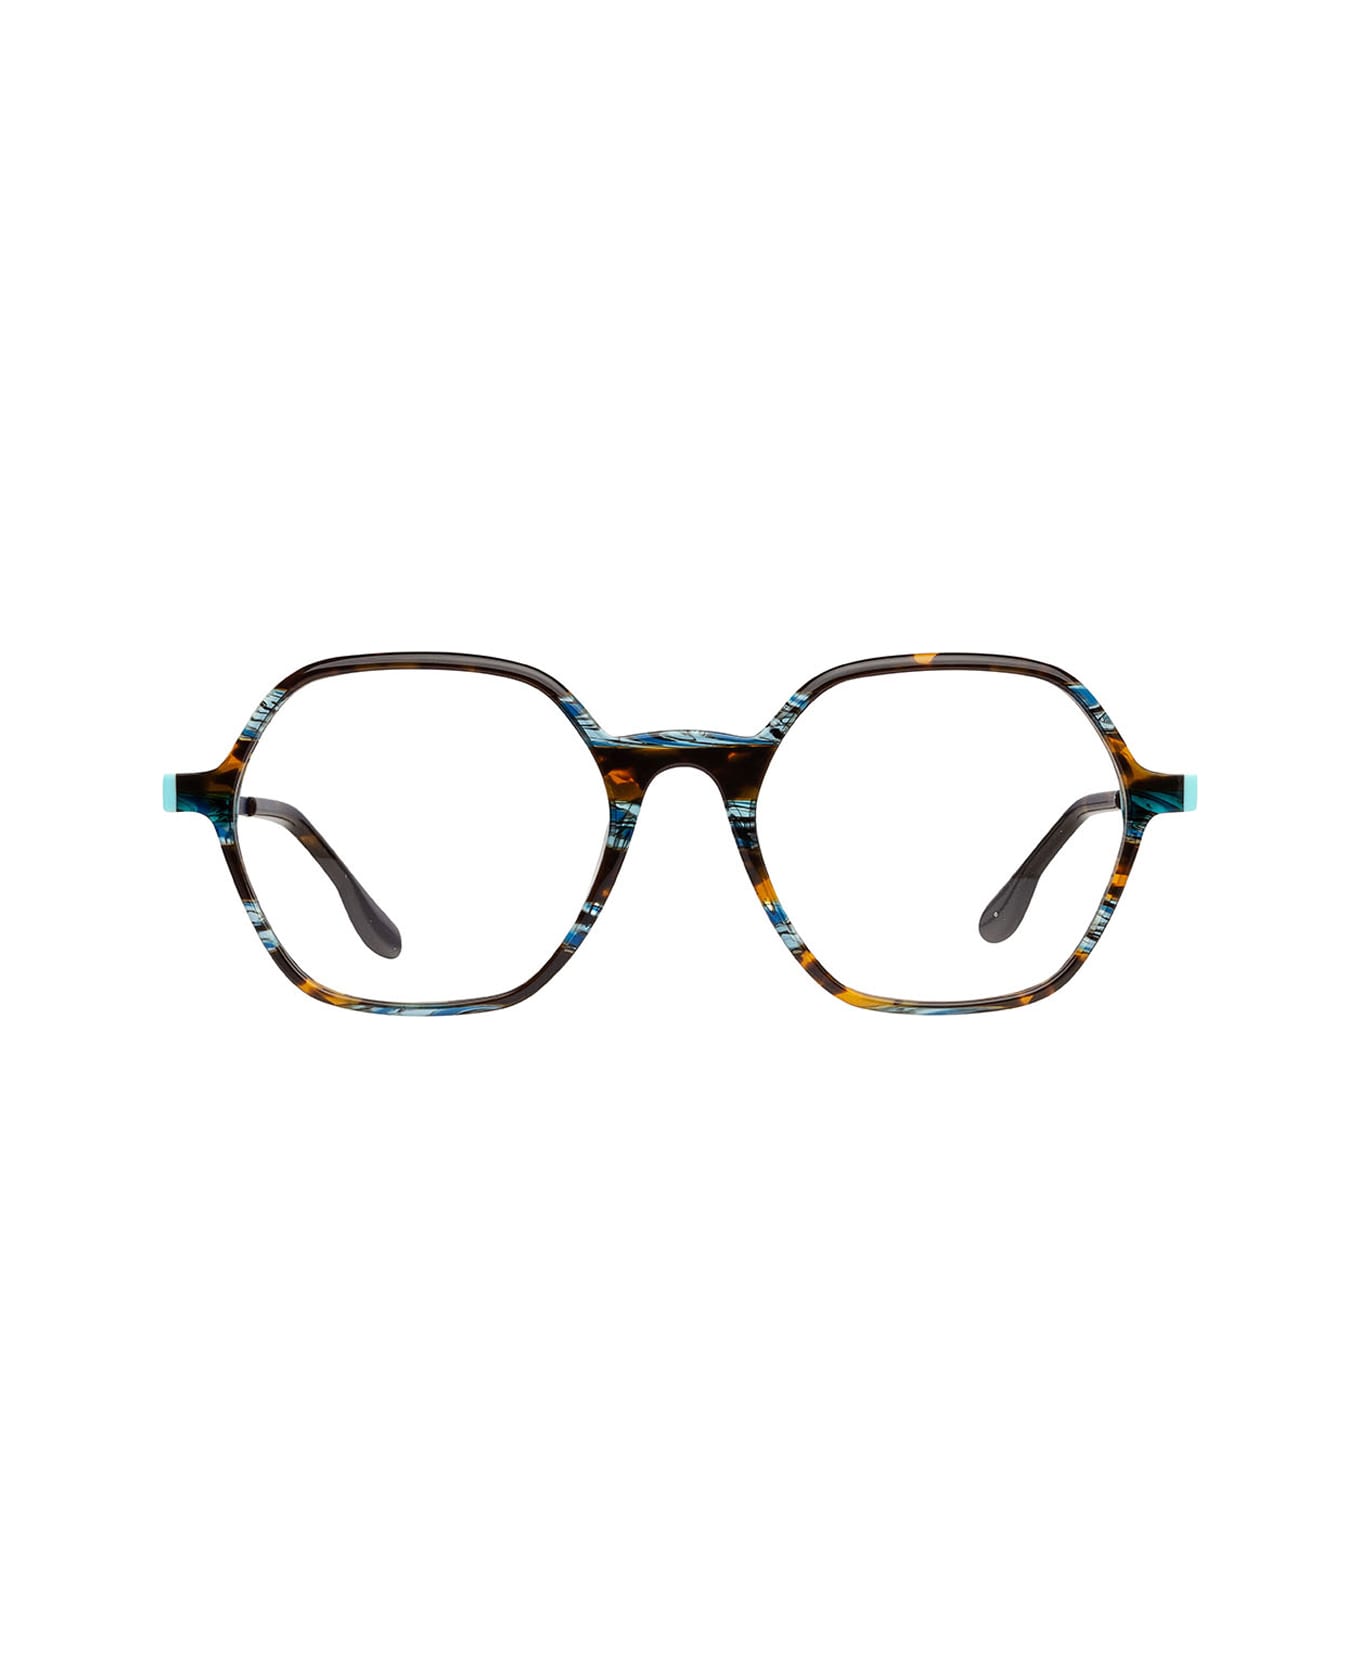 Matttew Iroise Glasses - Blu アイウェア